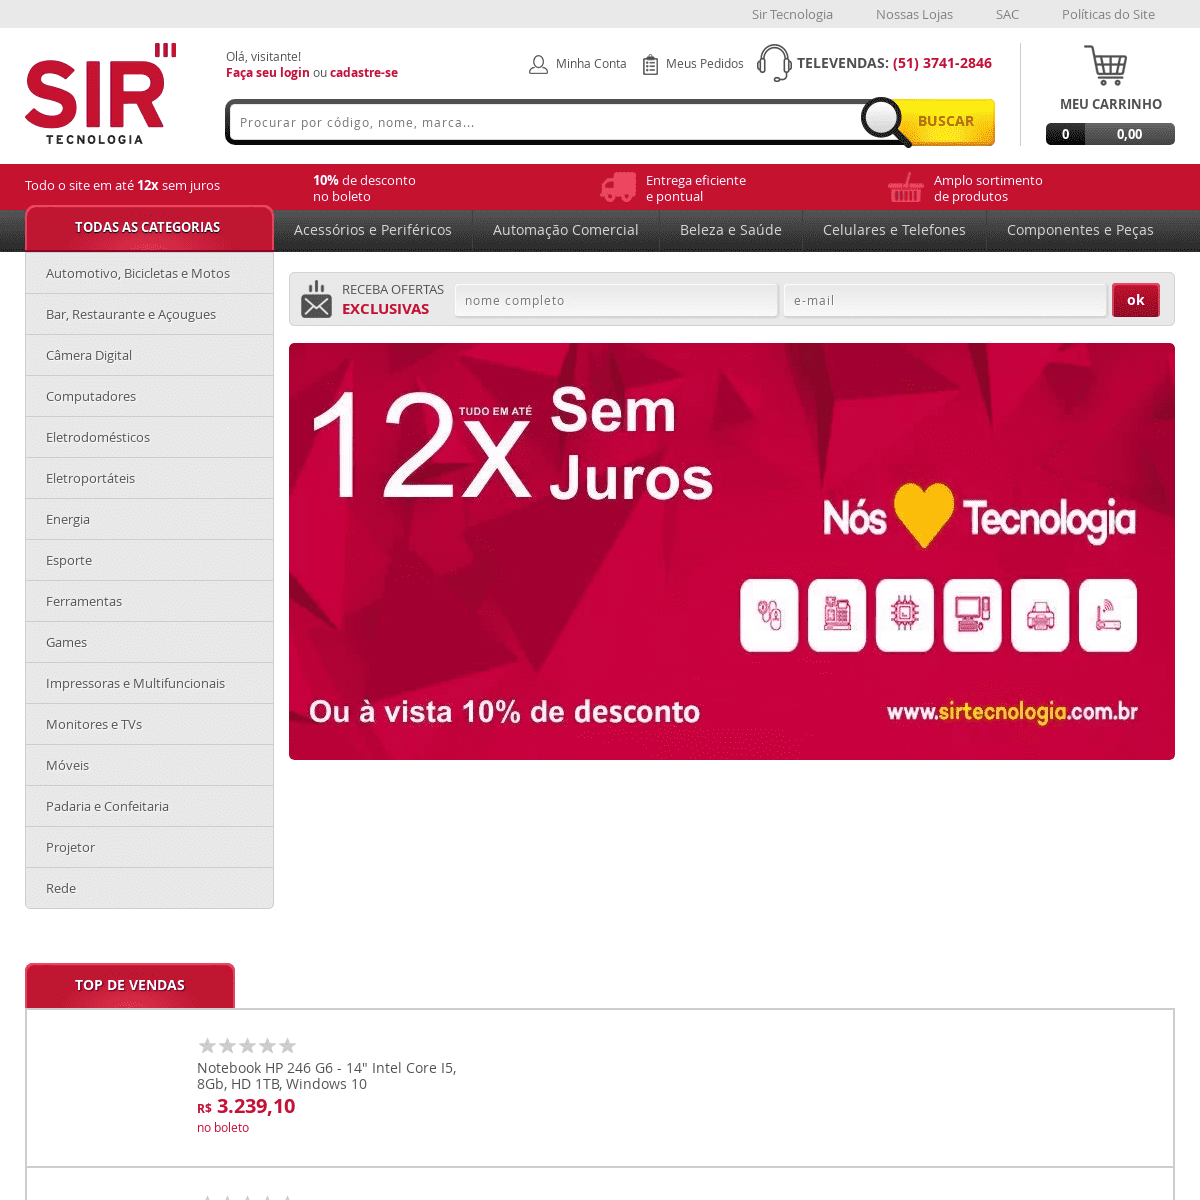 A complete backup of sirtecnologia.com.br